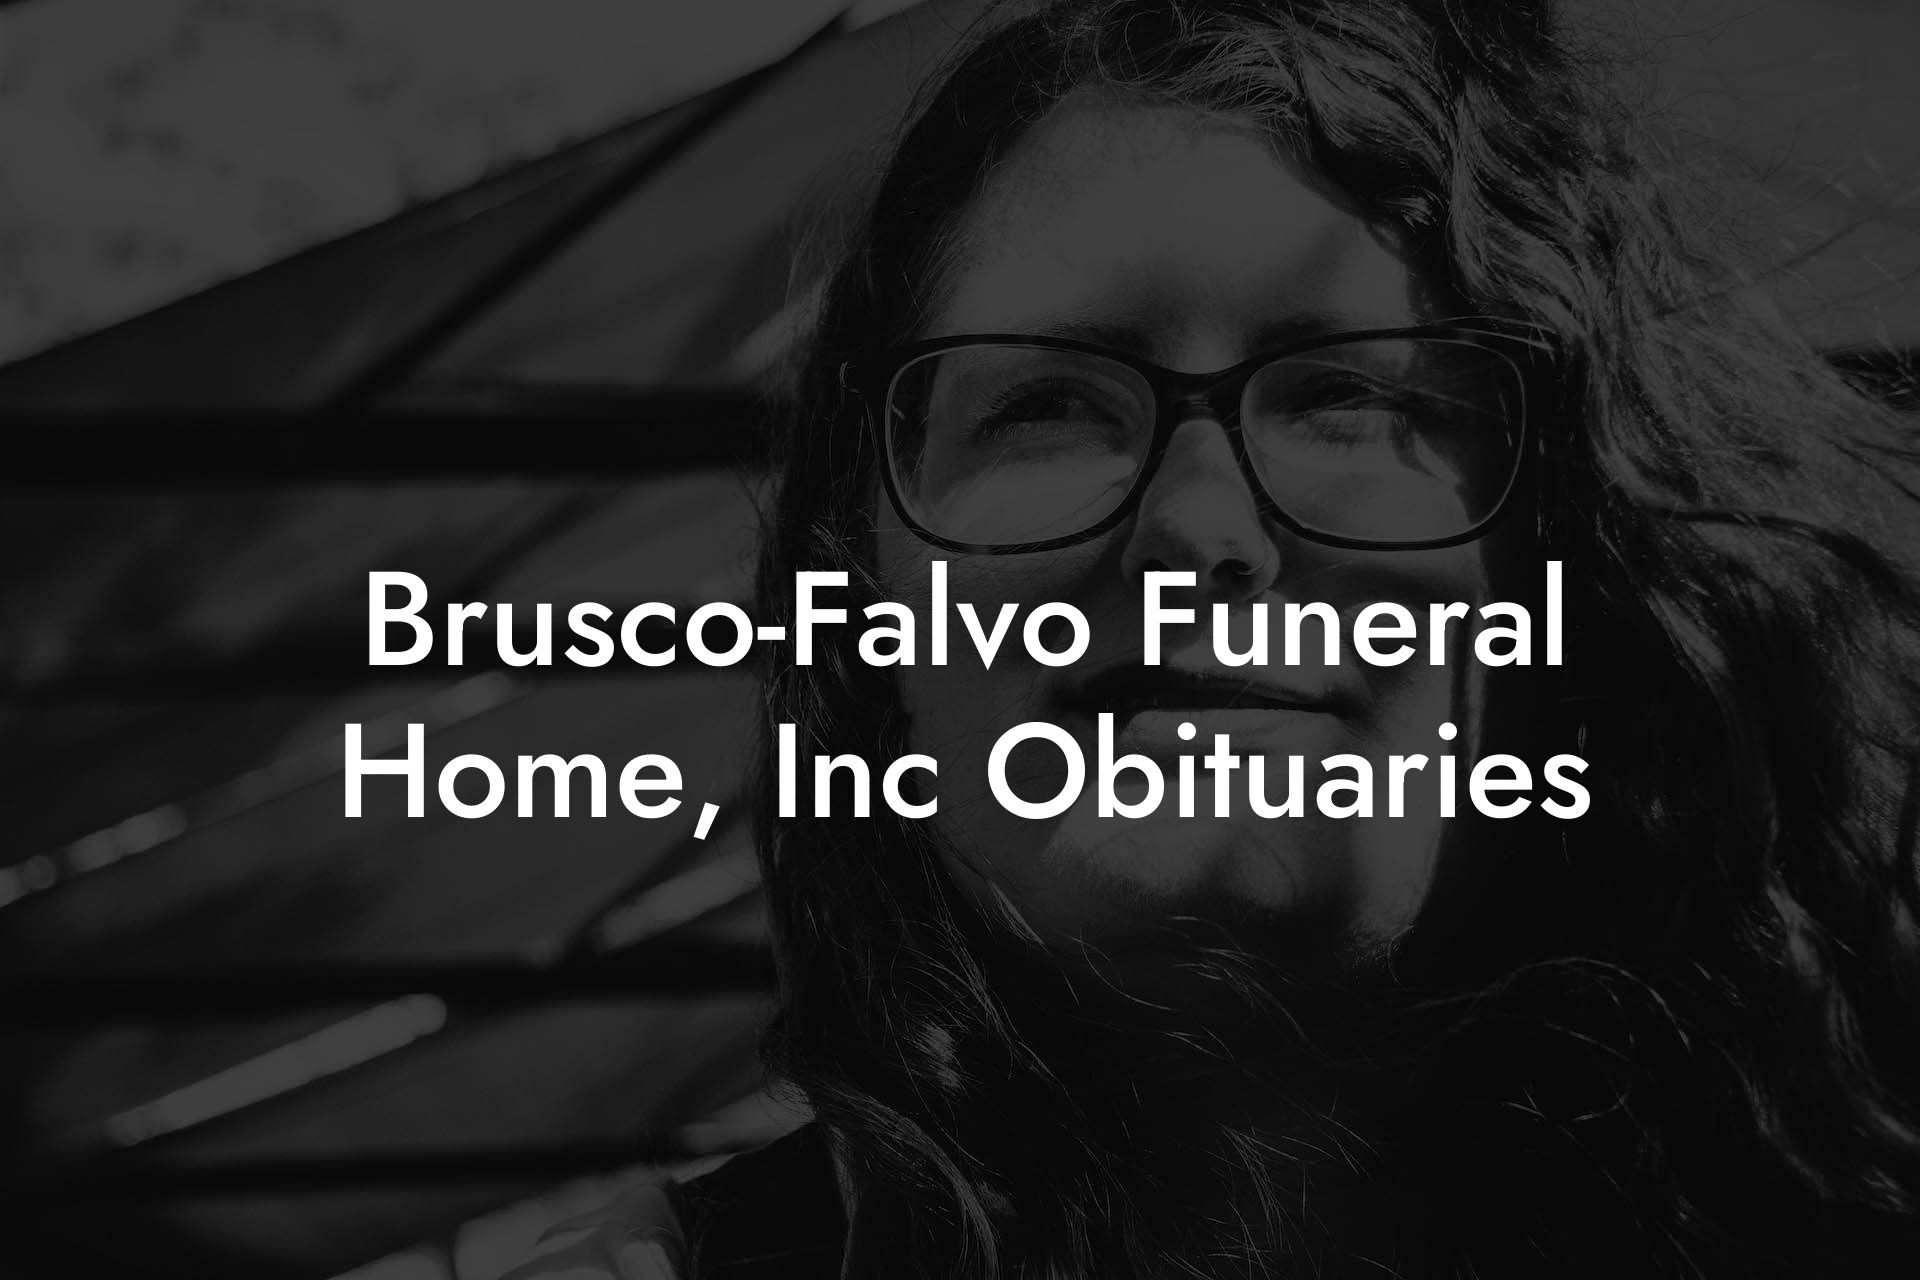 Brusco-Falvo Funeral Home, Inc Obituaries